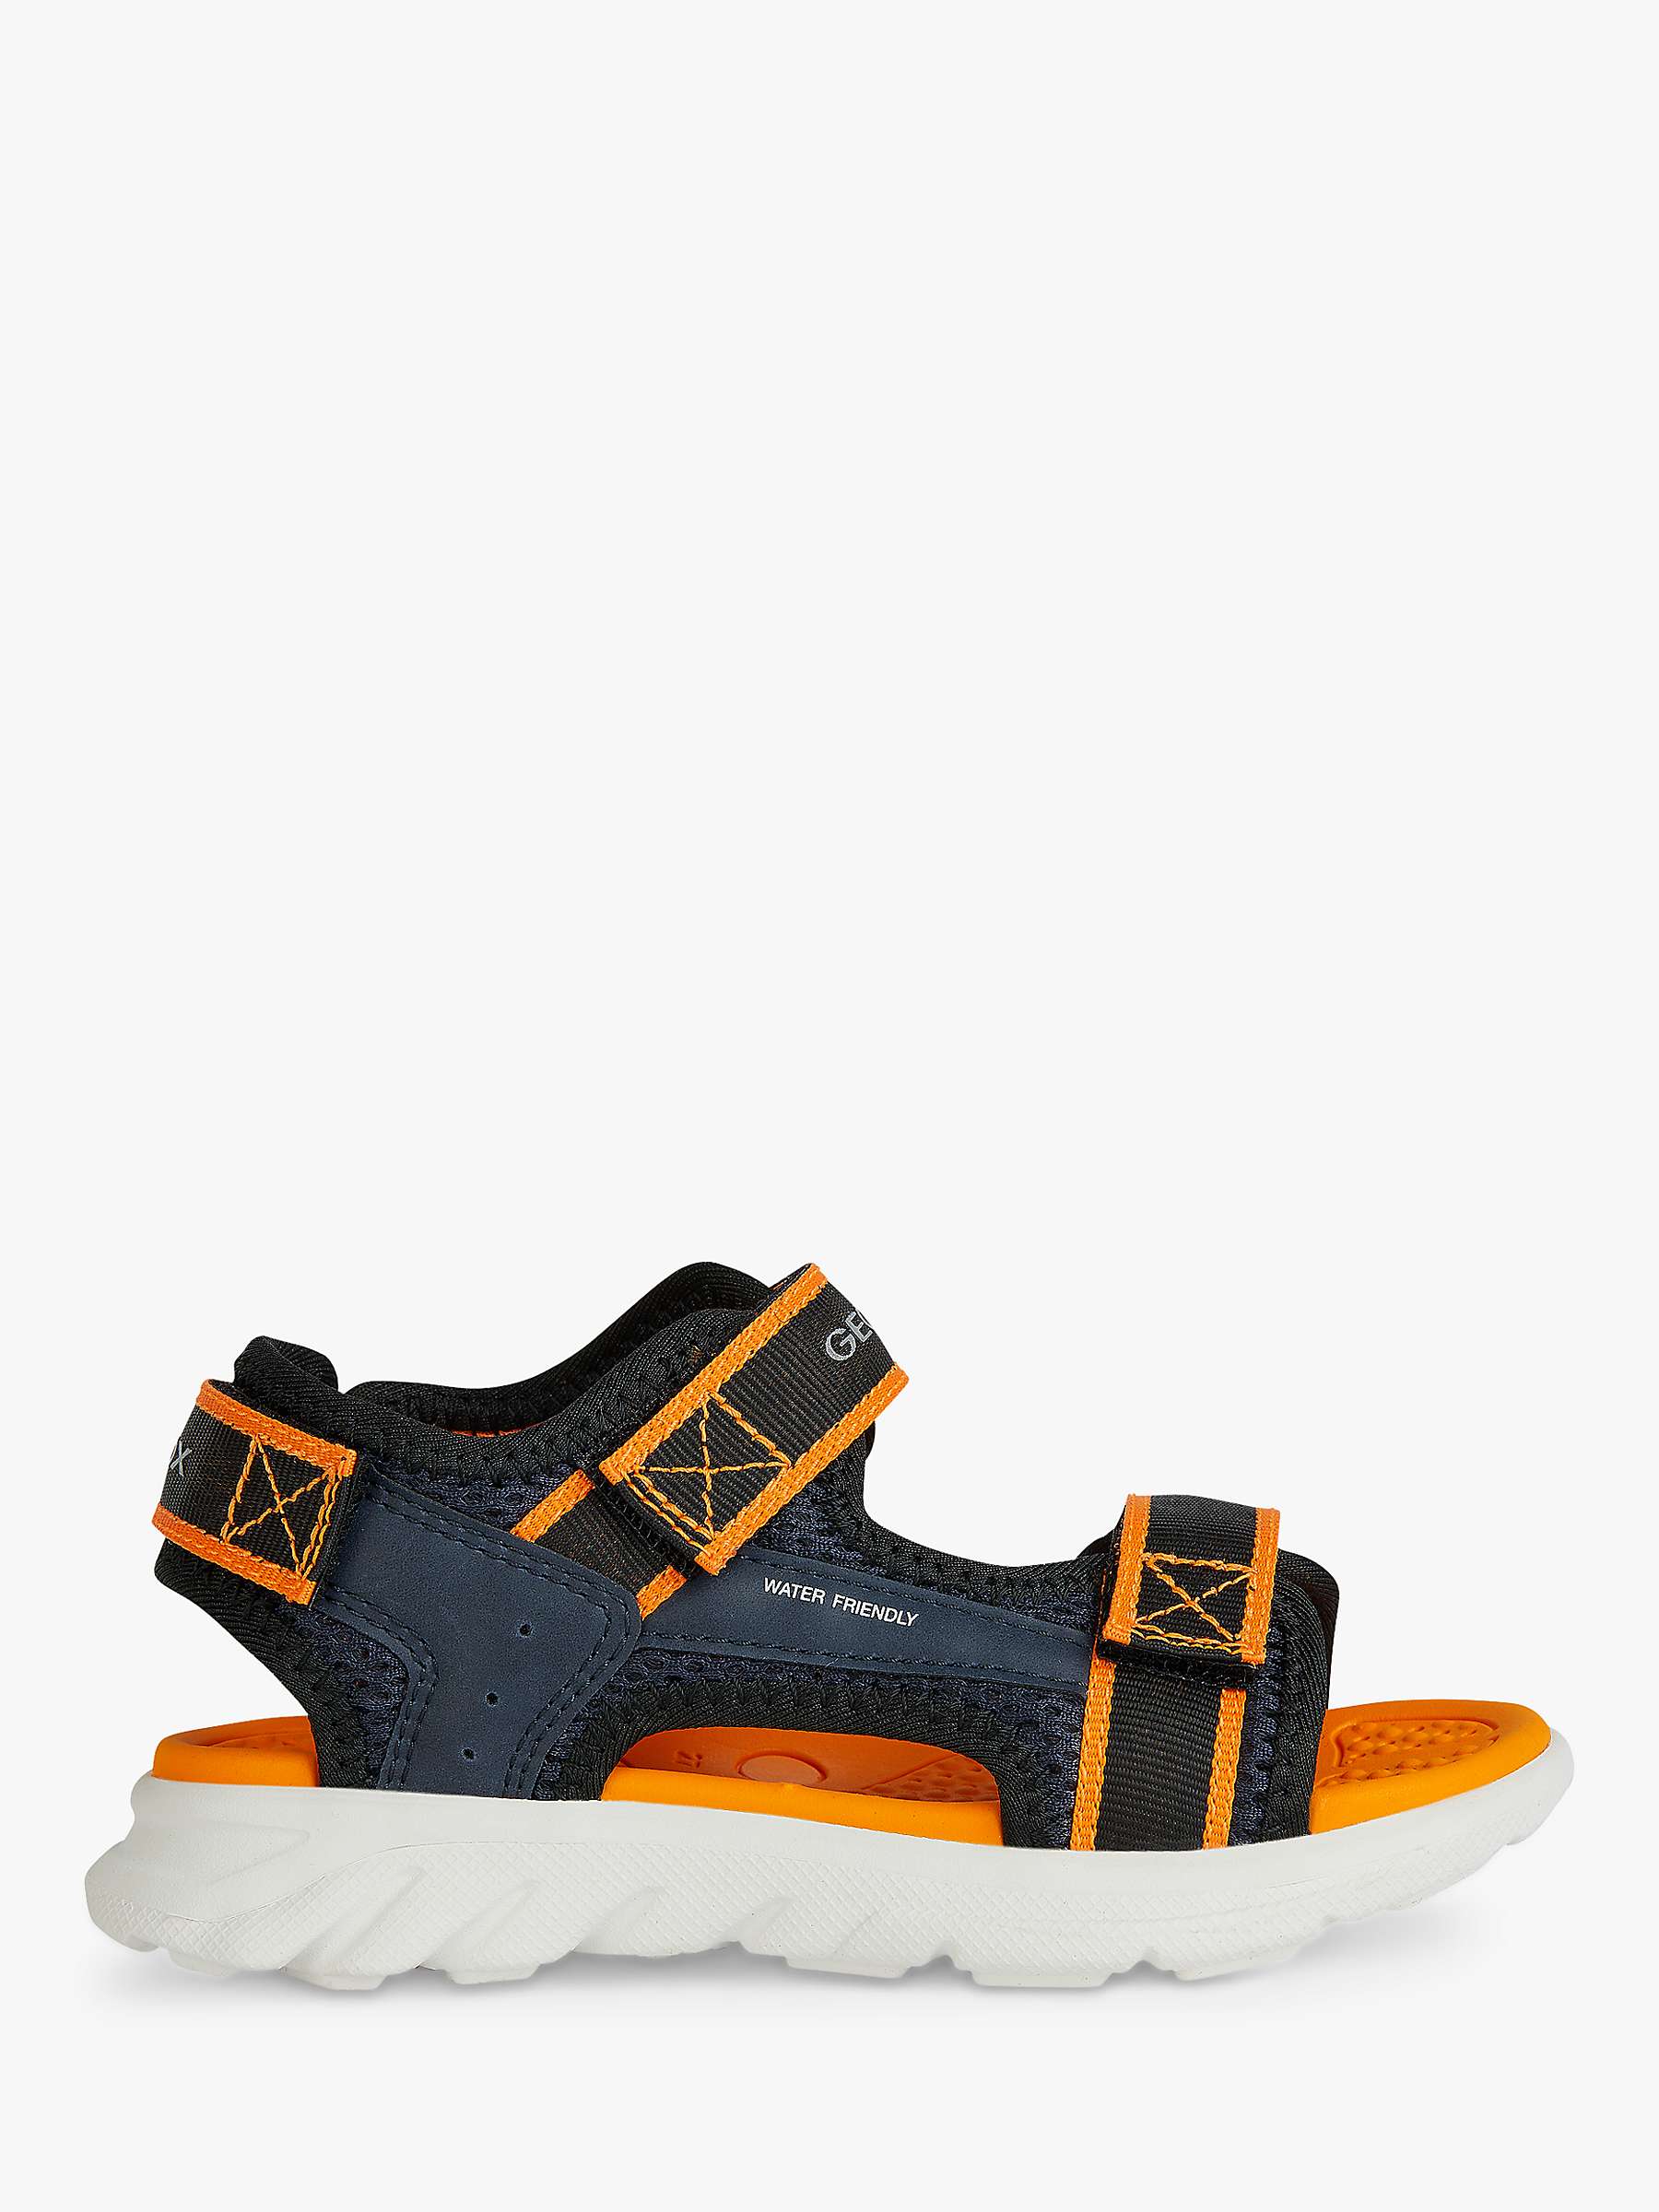 Buy Geox Kids' Airadyum Mesh Sandals, Navy/Orange Online at johnlewis.com